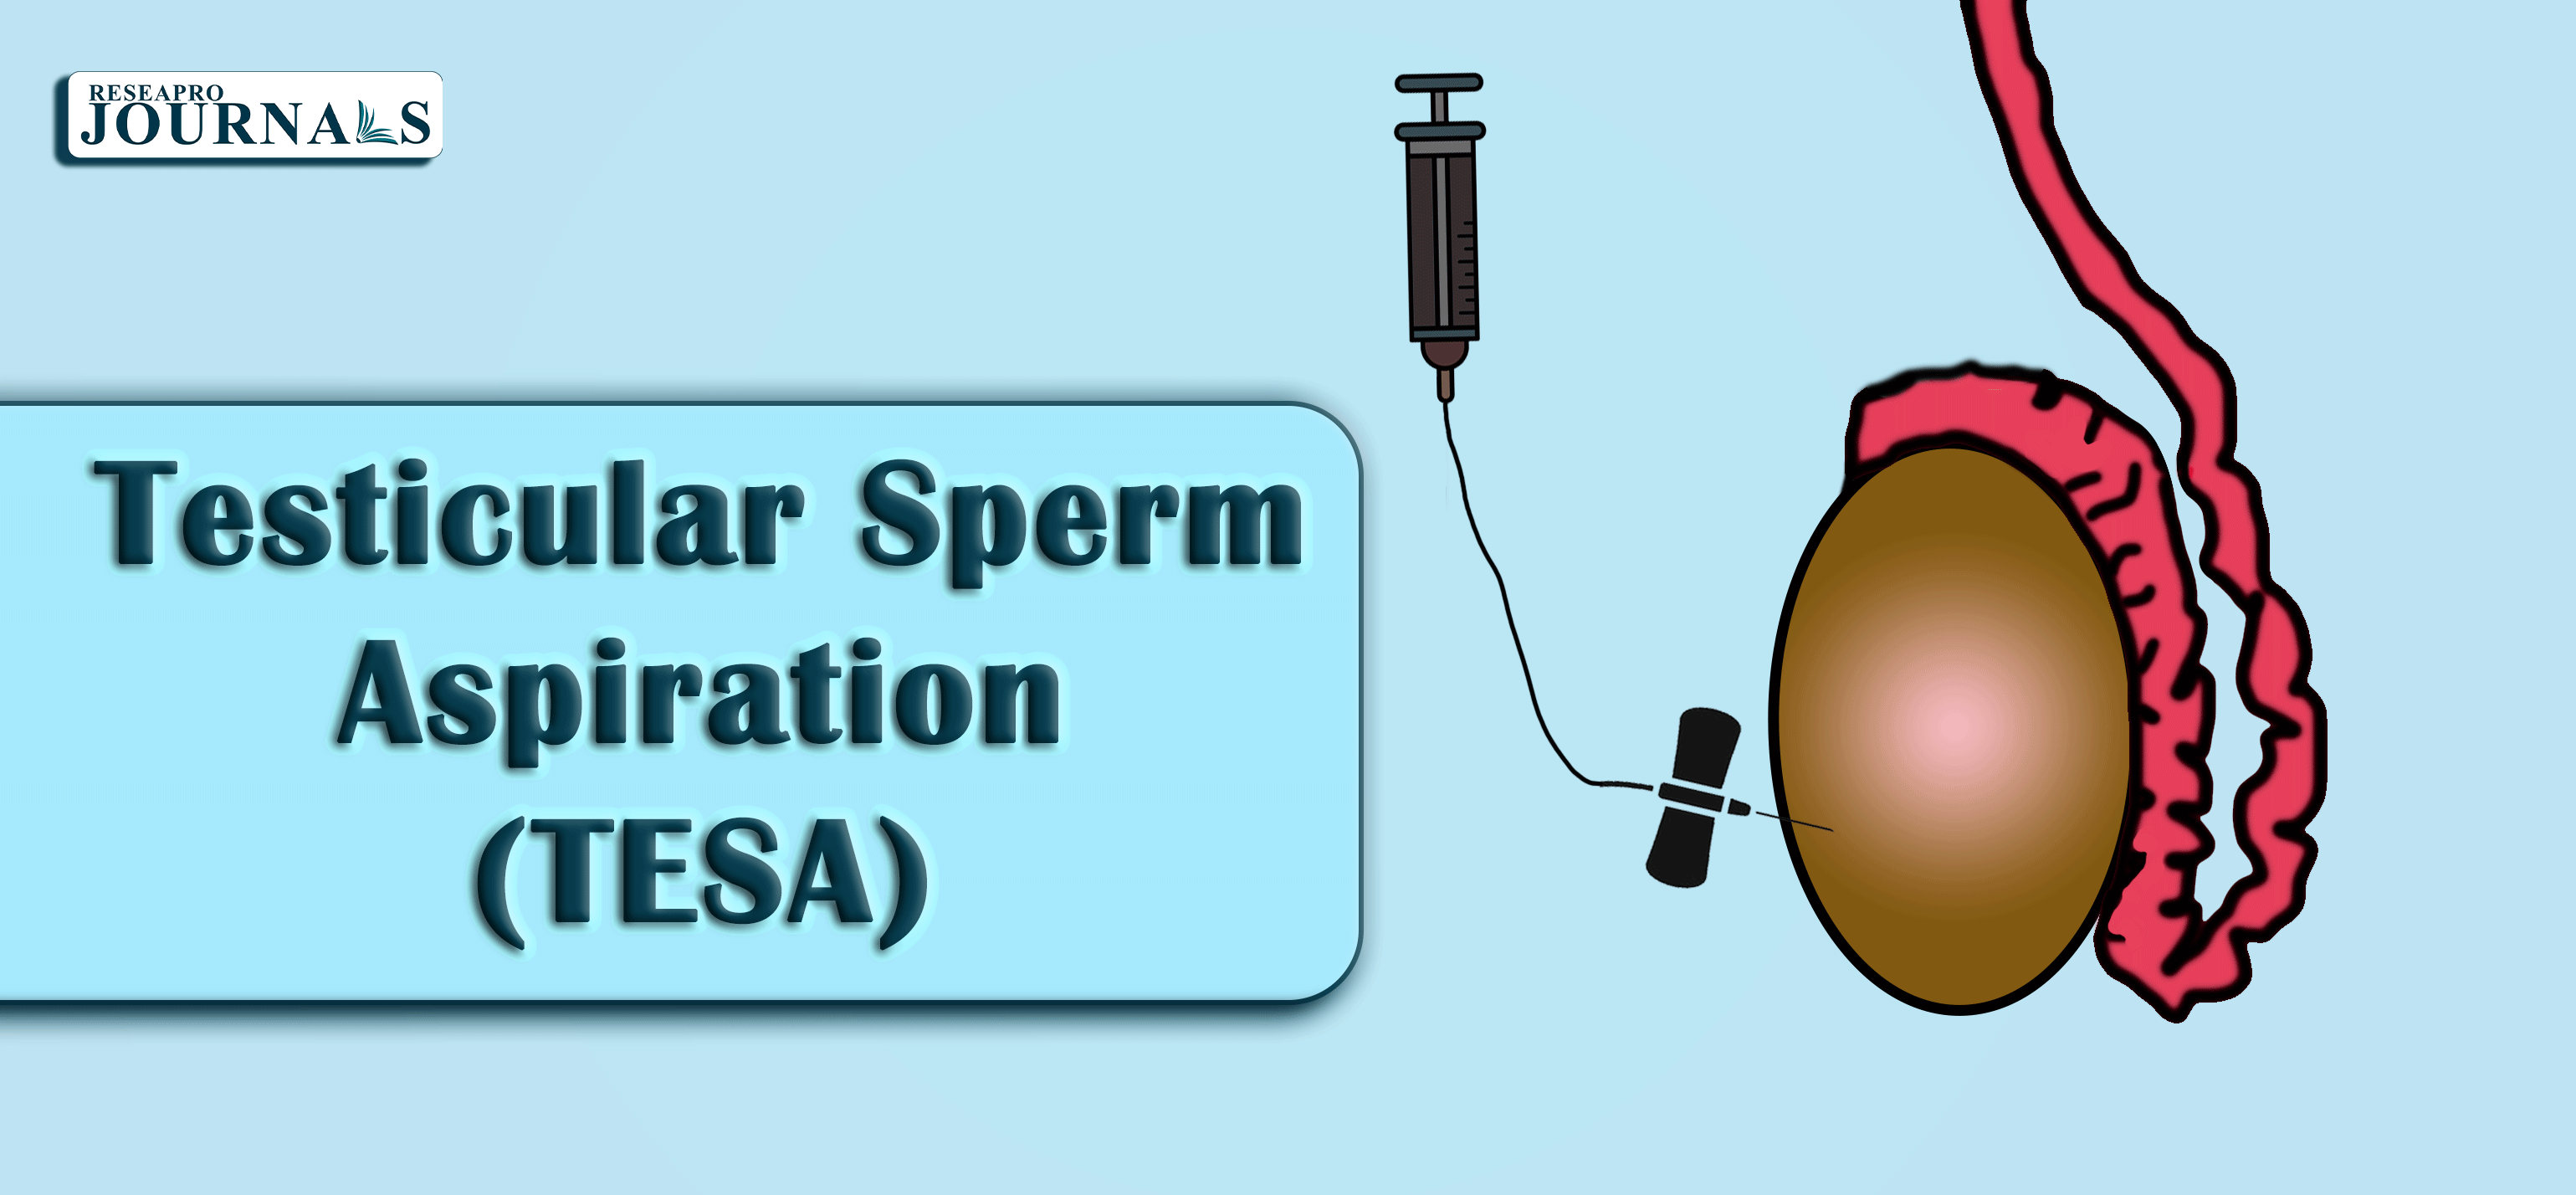 TESA: Direct testicular sperm retrieval for IVF with minimal invasiveness